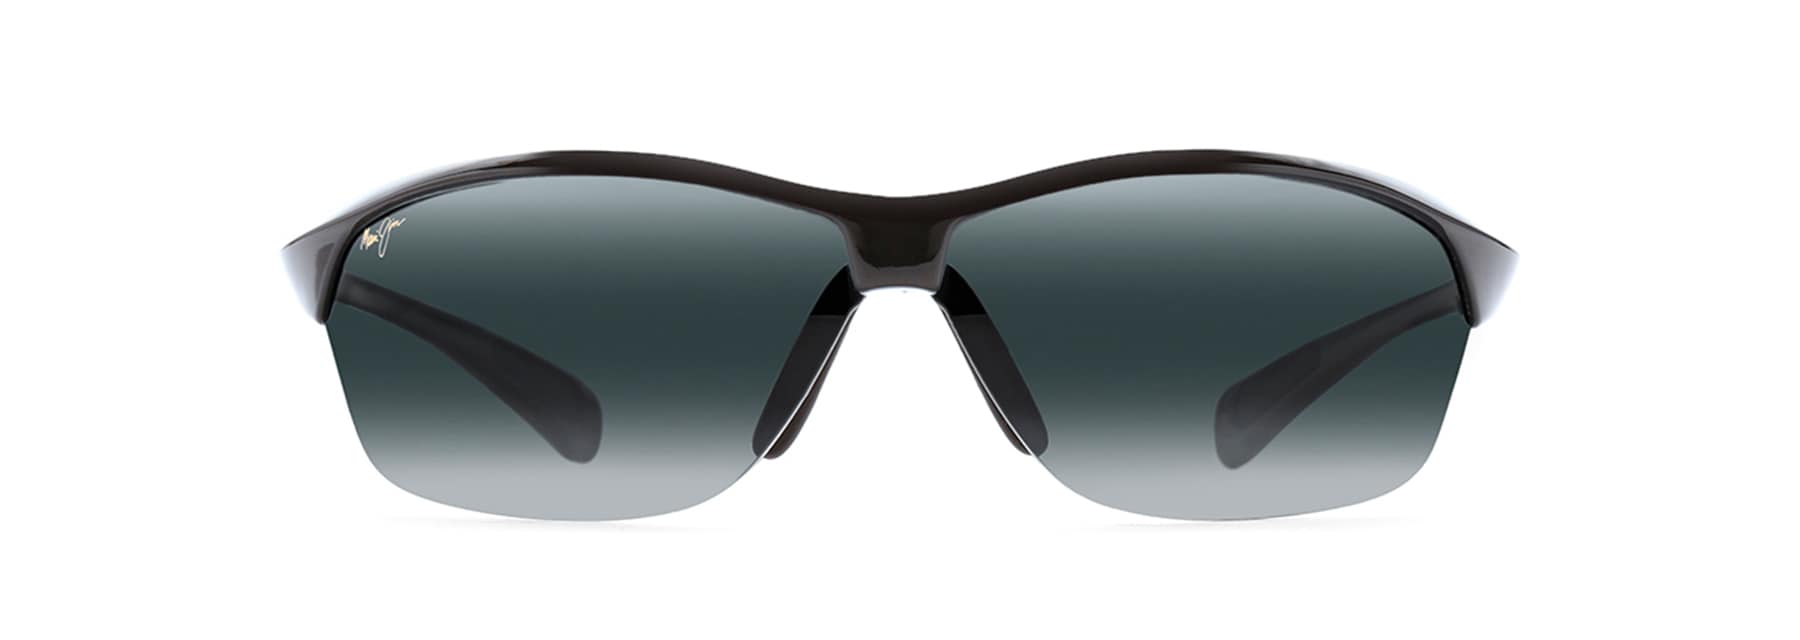 with Patented PolarizedPlus2 Lens Technology Hot Sands 426 Rimless Frame Maui Jim Sunglasses Polarized Lenses 